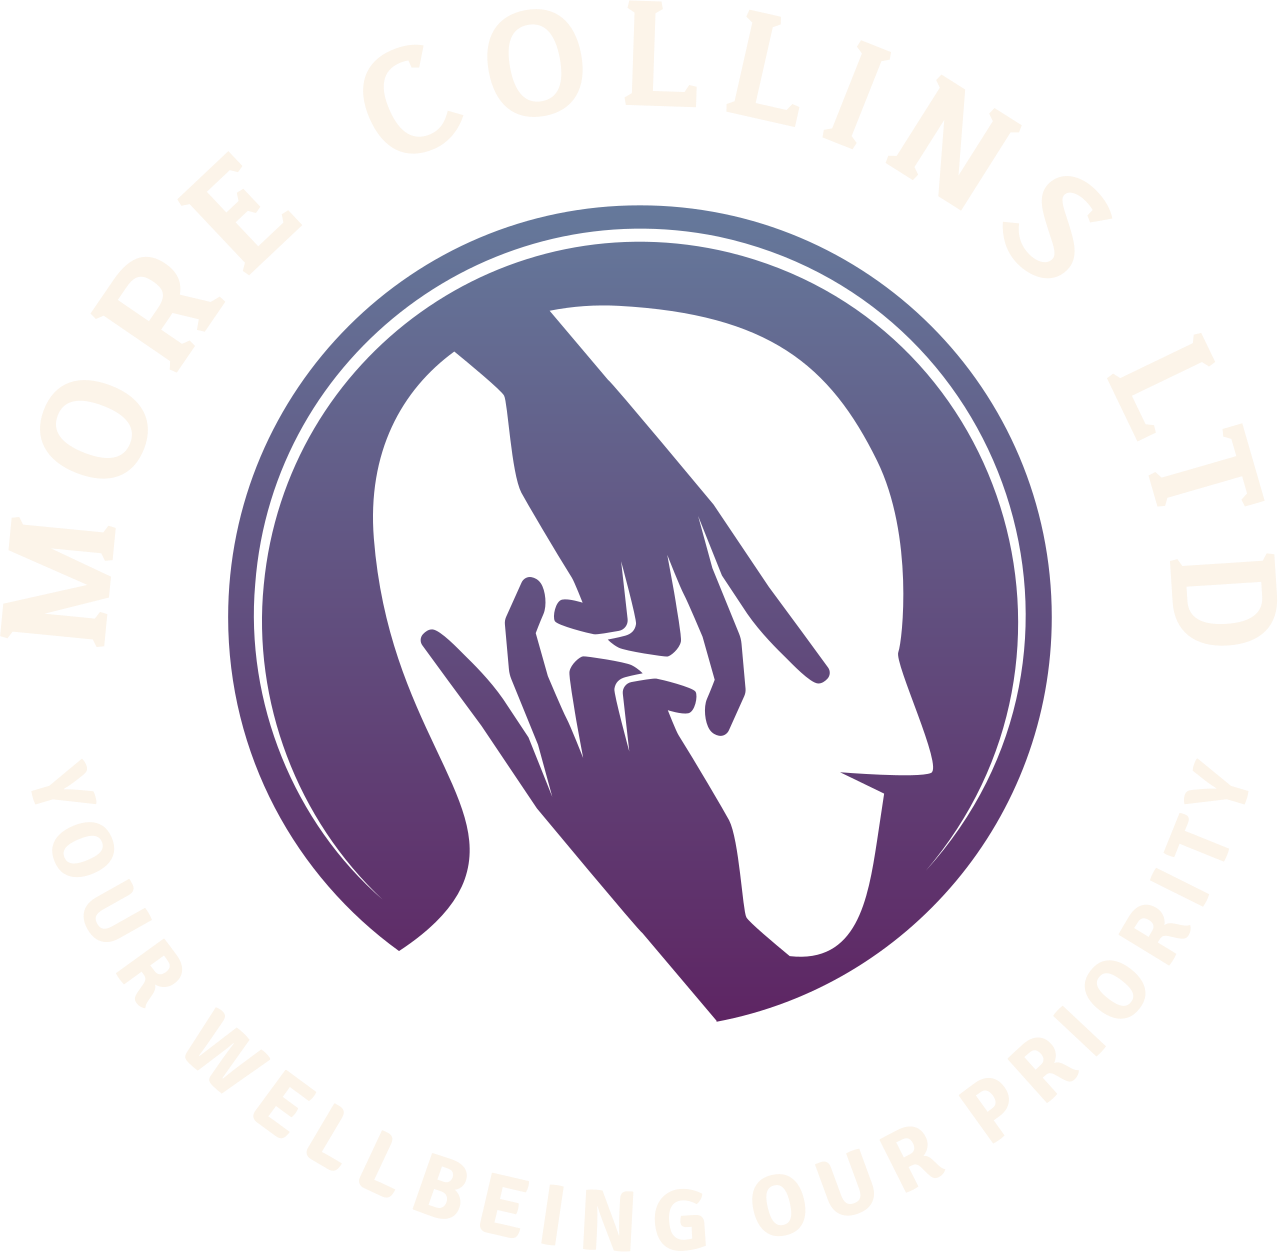 MORE COLLINS LTD's logo